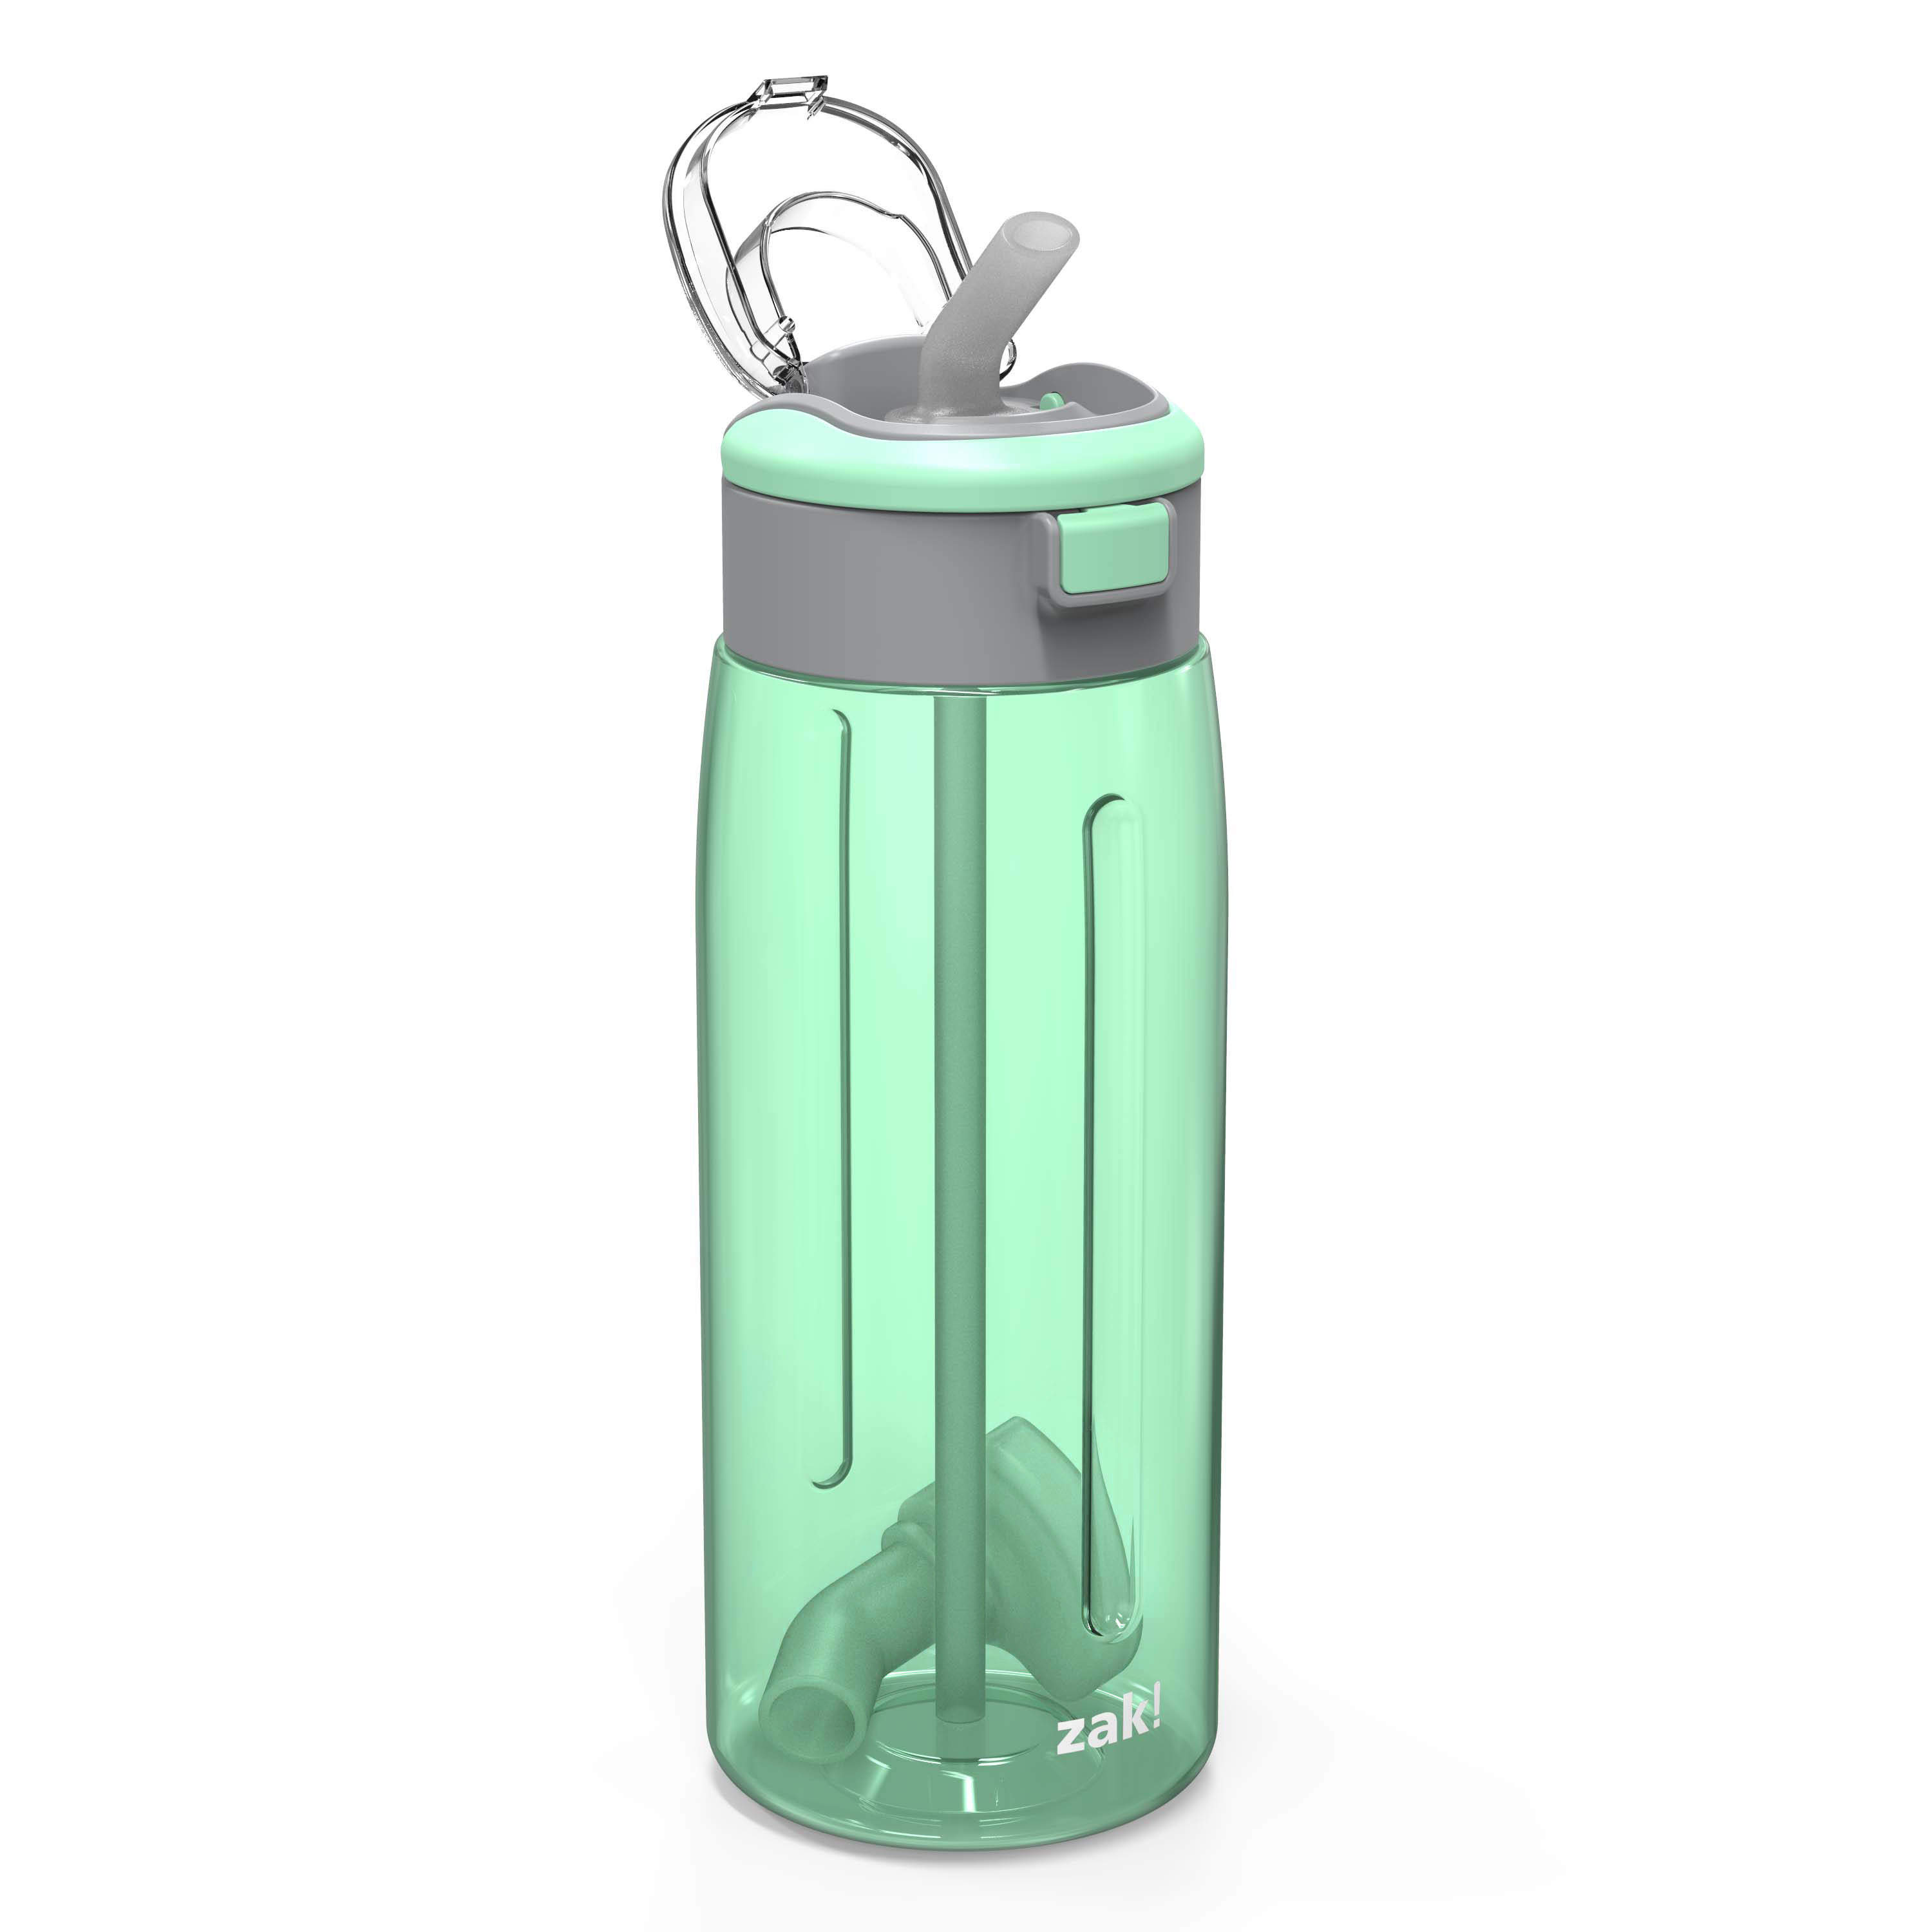 Genesis 32 ounce Reusable Plastic Water Bottle with Interchangeable Spouts, Neo Mint slideshow image 2